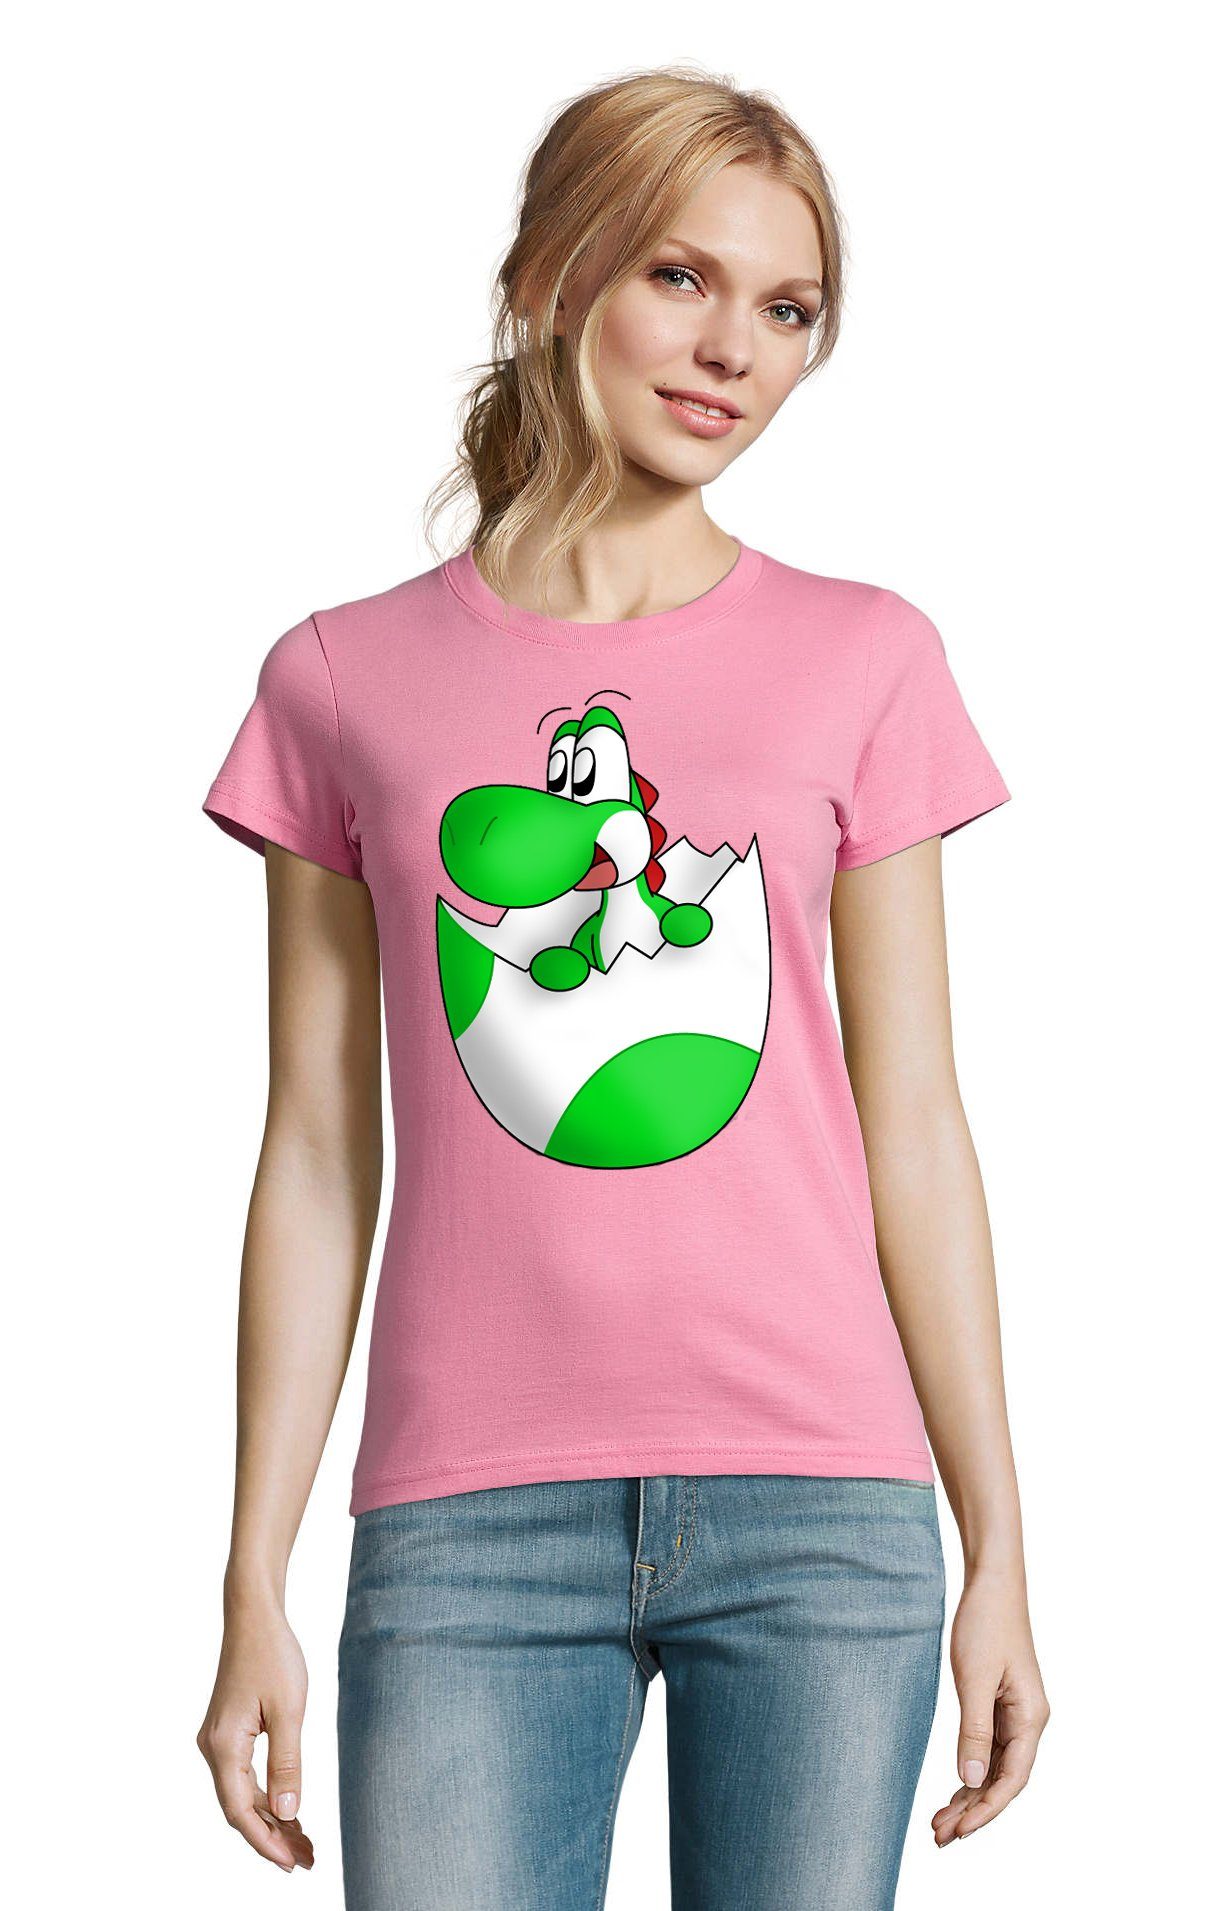 Nintendo Spiel & Gaming Brownie Baby Blondie Rosa Konsole Yoshi T-Shirt Ei Damen Mario